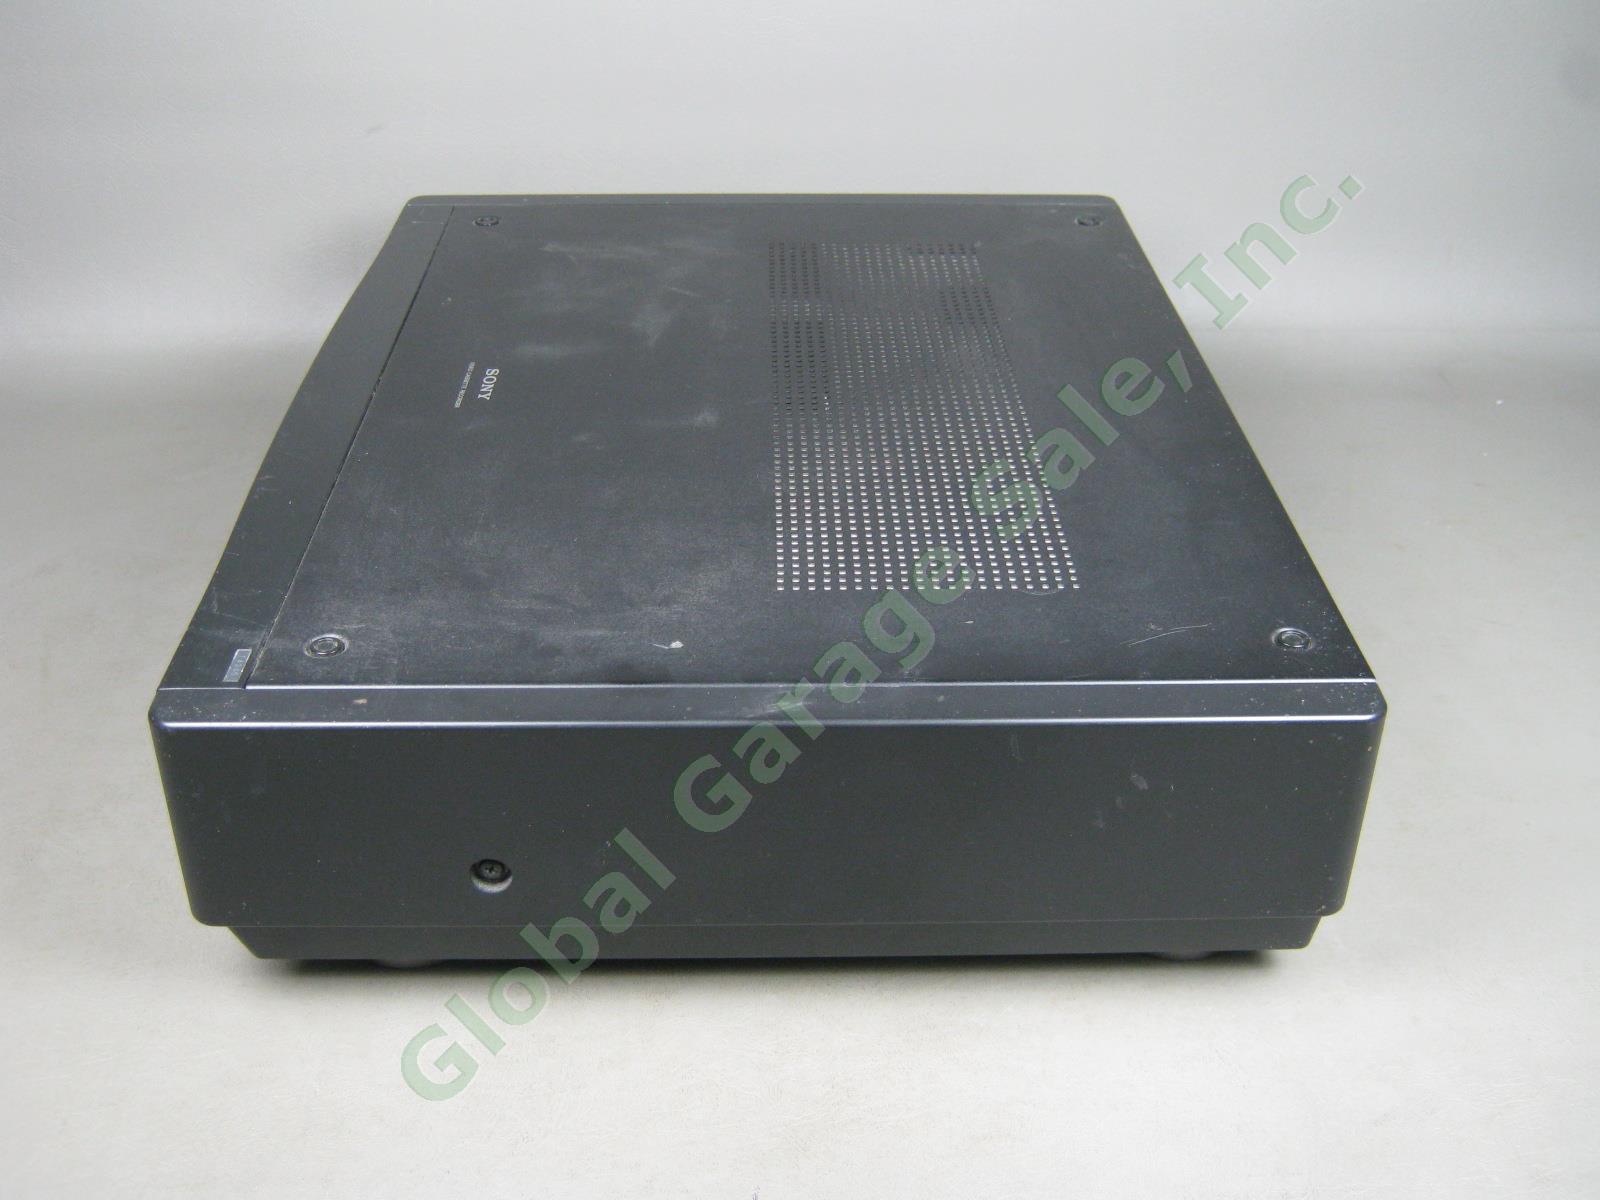 Sony EV-S7000 Hi8 8mm Digital HiFi Editing VCR Player Recorder +Remote Bundle NR 2